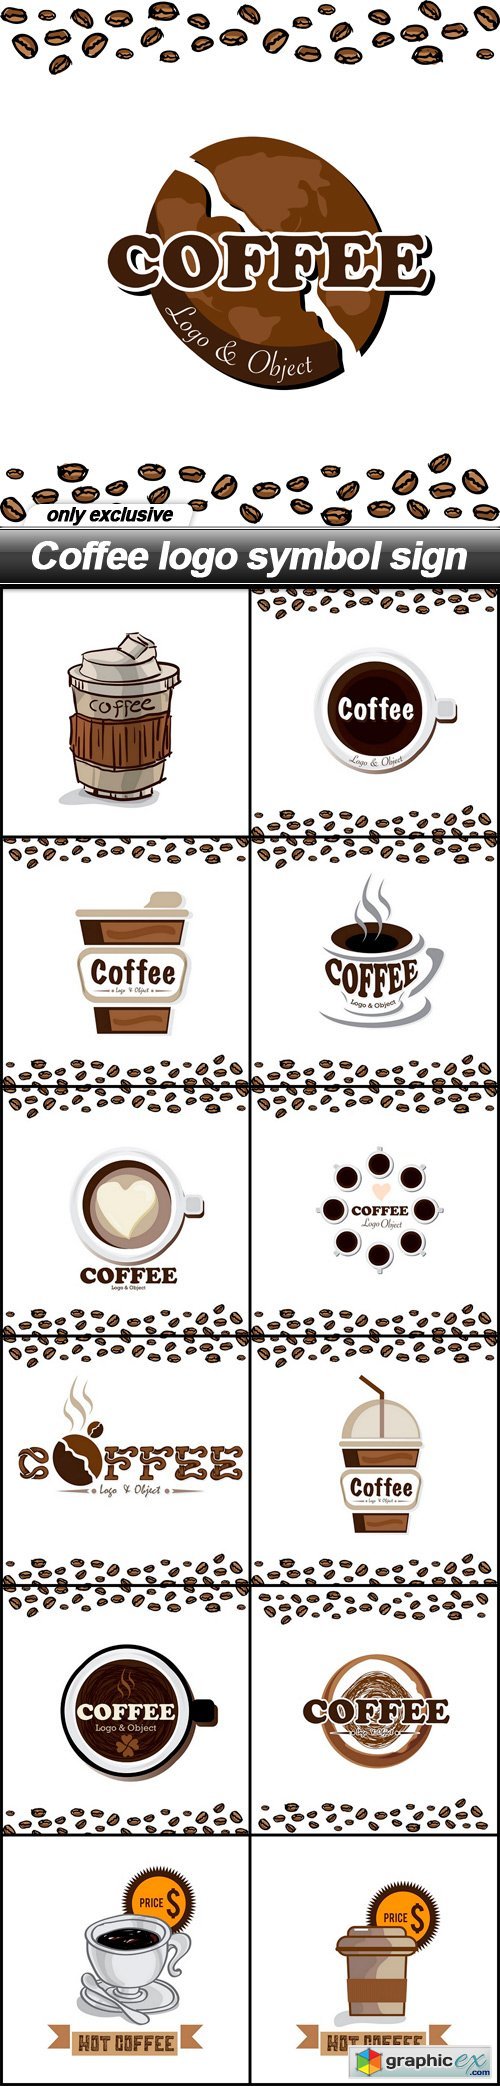 Coffee logo symbol sign - 13 EPS